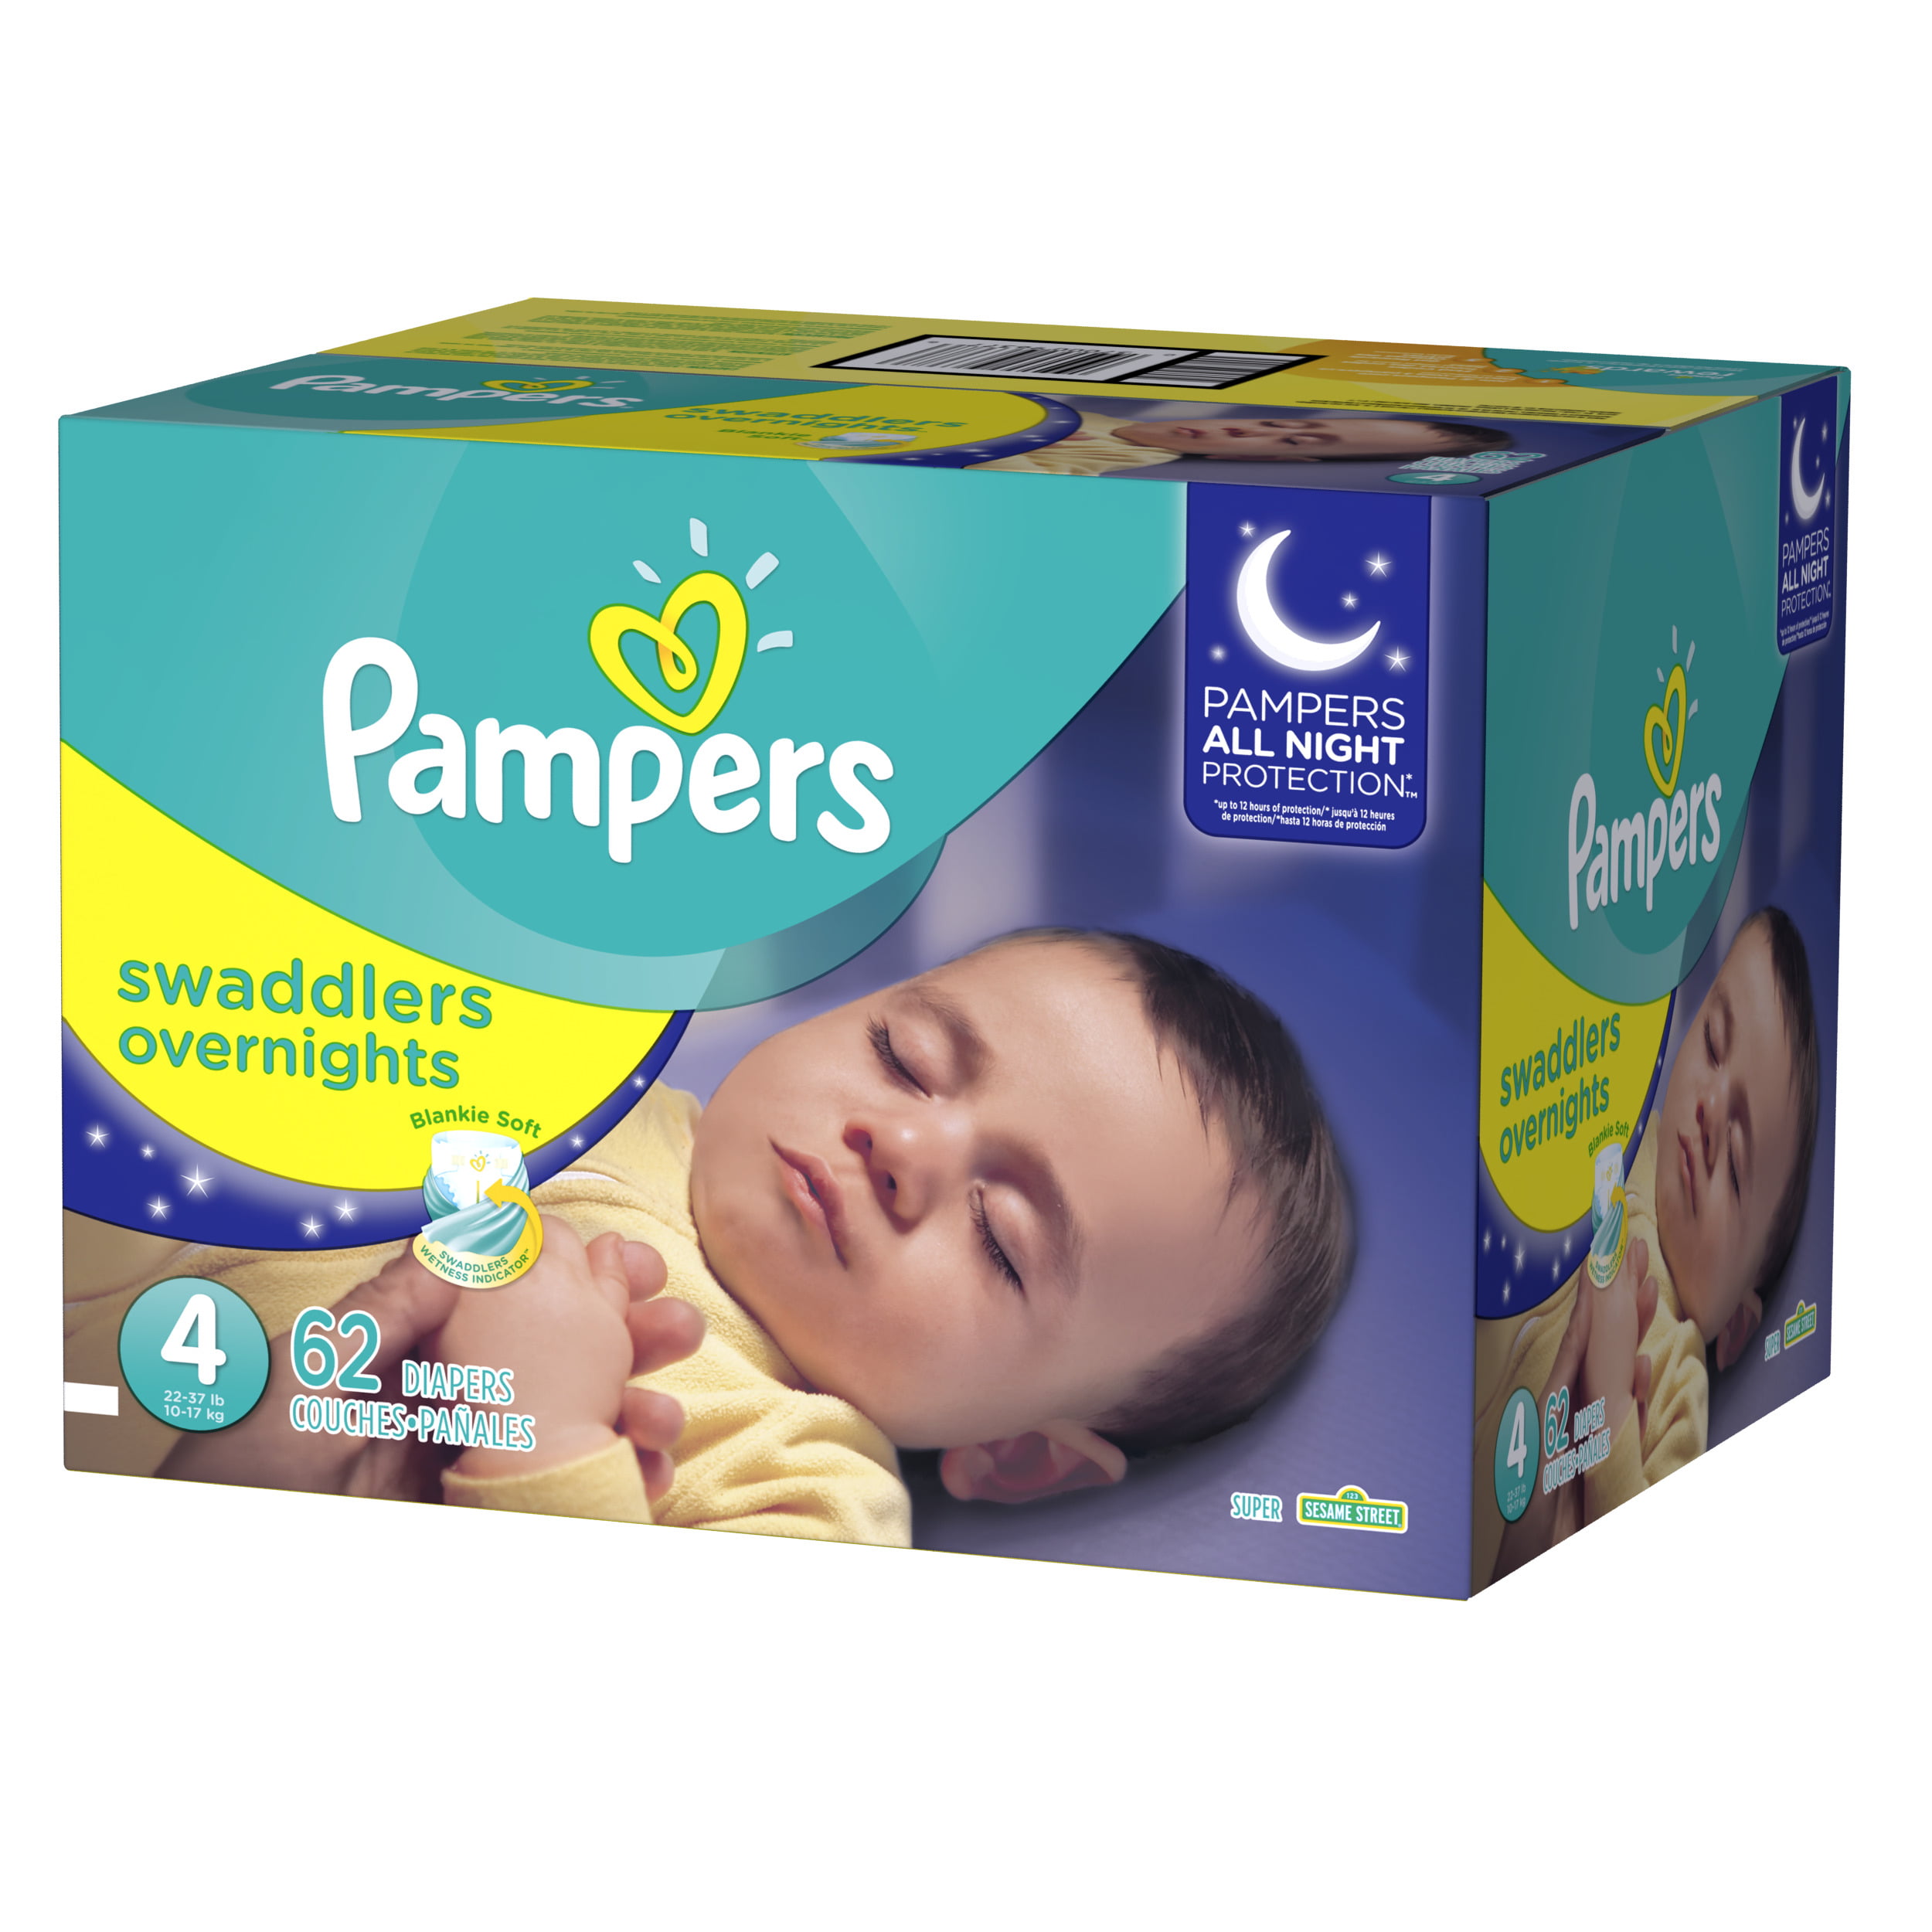 walmart brand overnight diapers